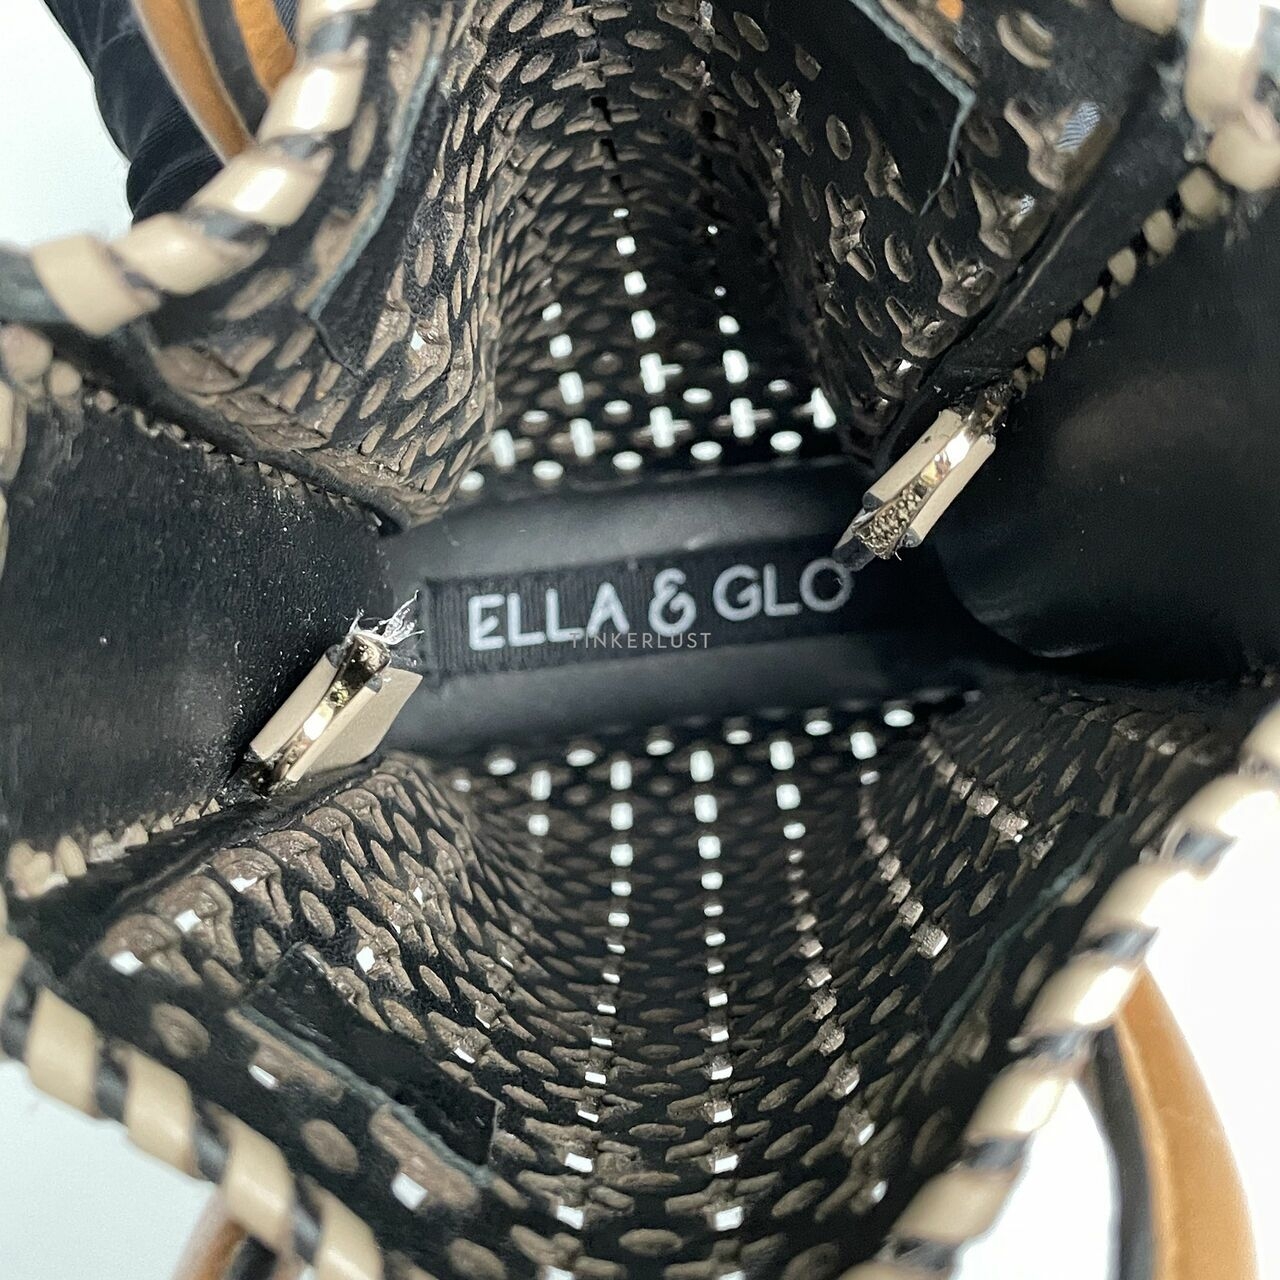 Ella & Glo Nude Sling Bag